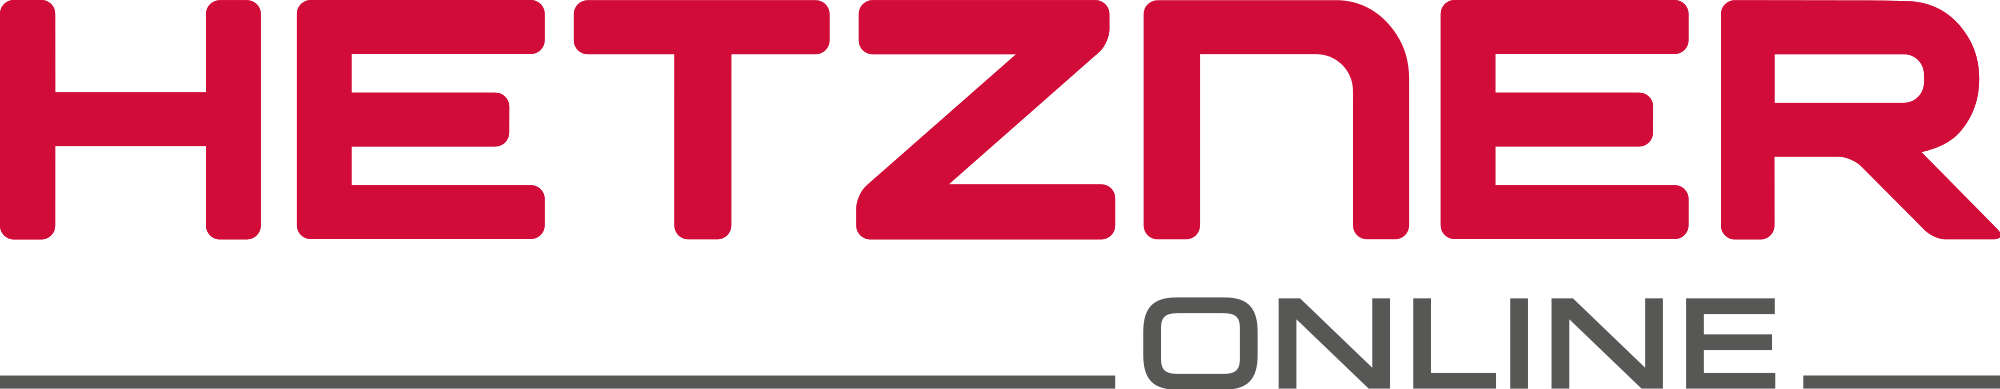 Logo_Hetzner.svg